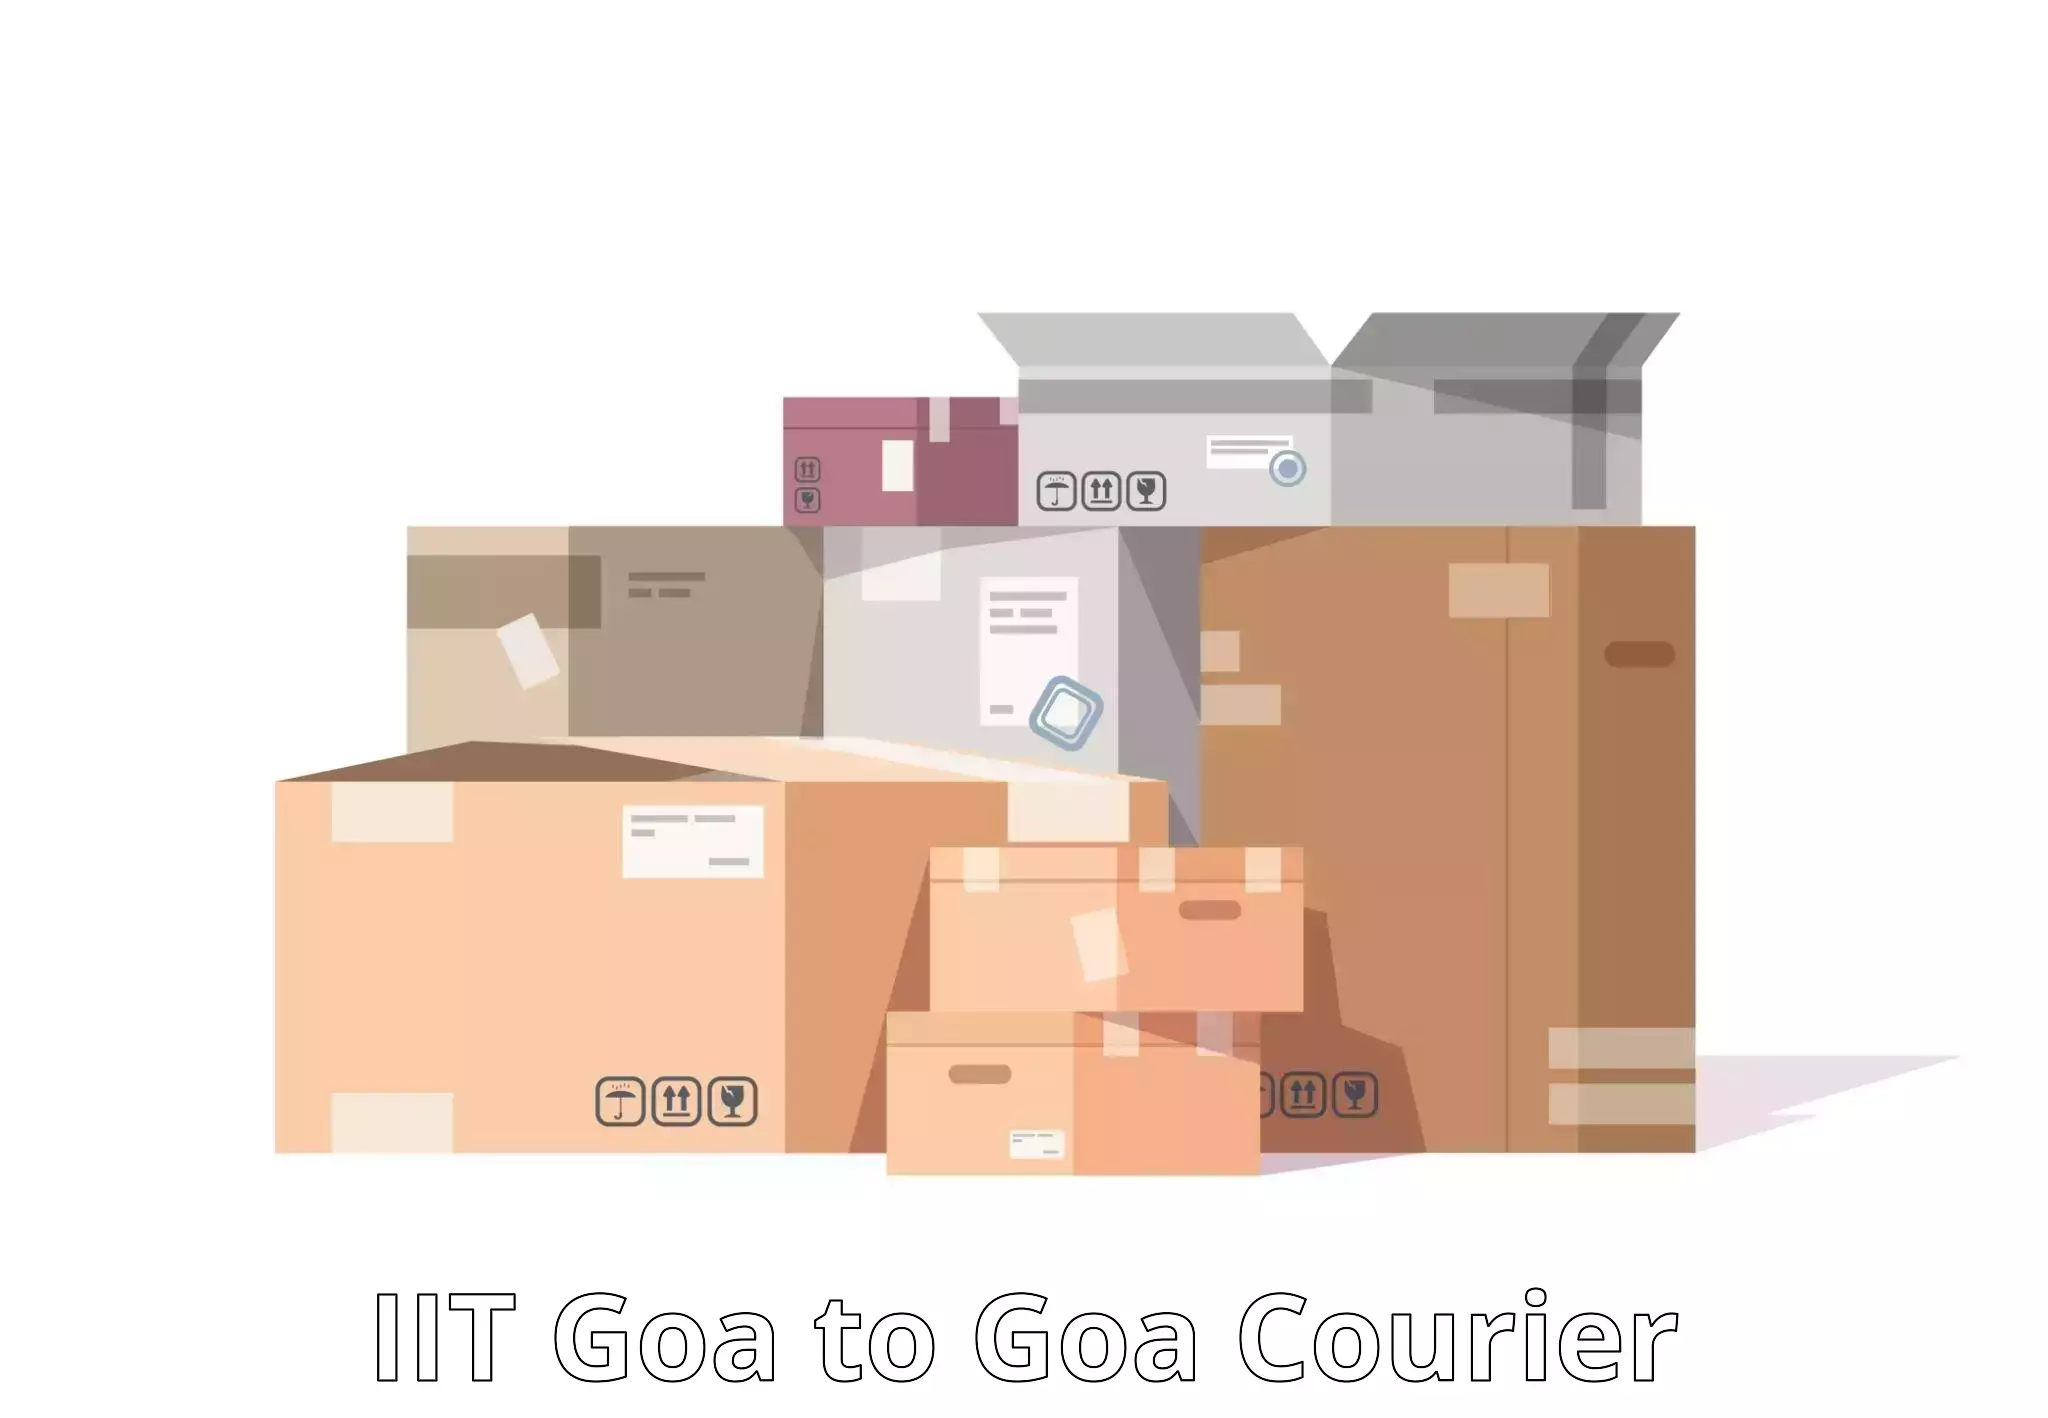 Enhanced tracking features IIT Goa to NIT Goa